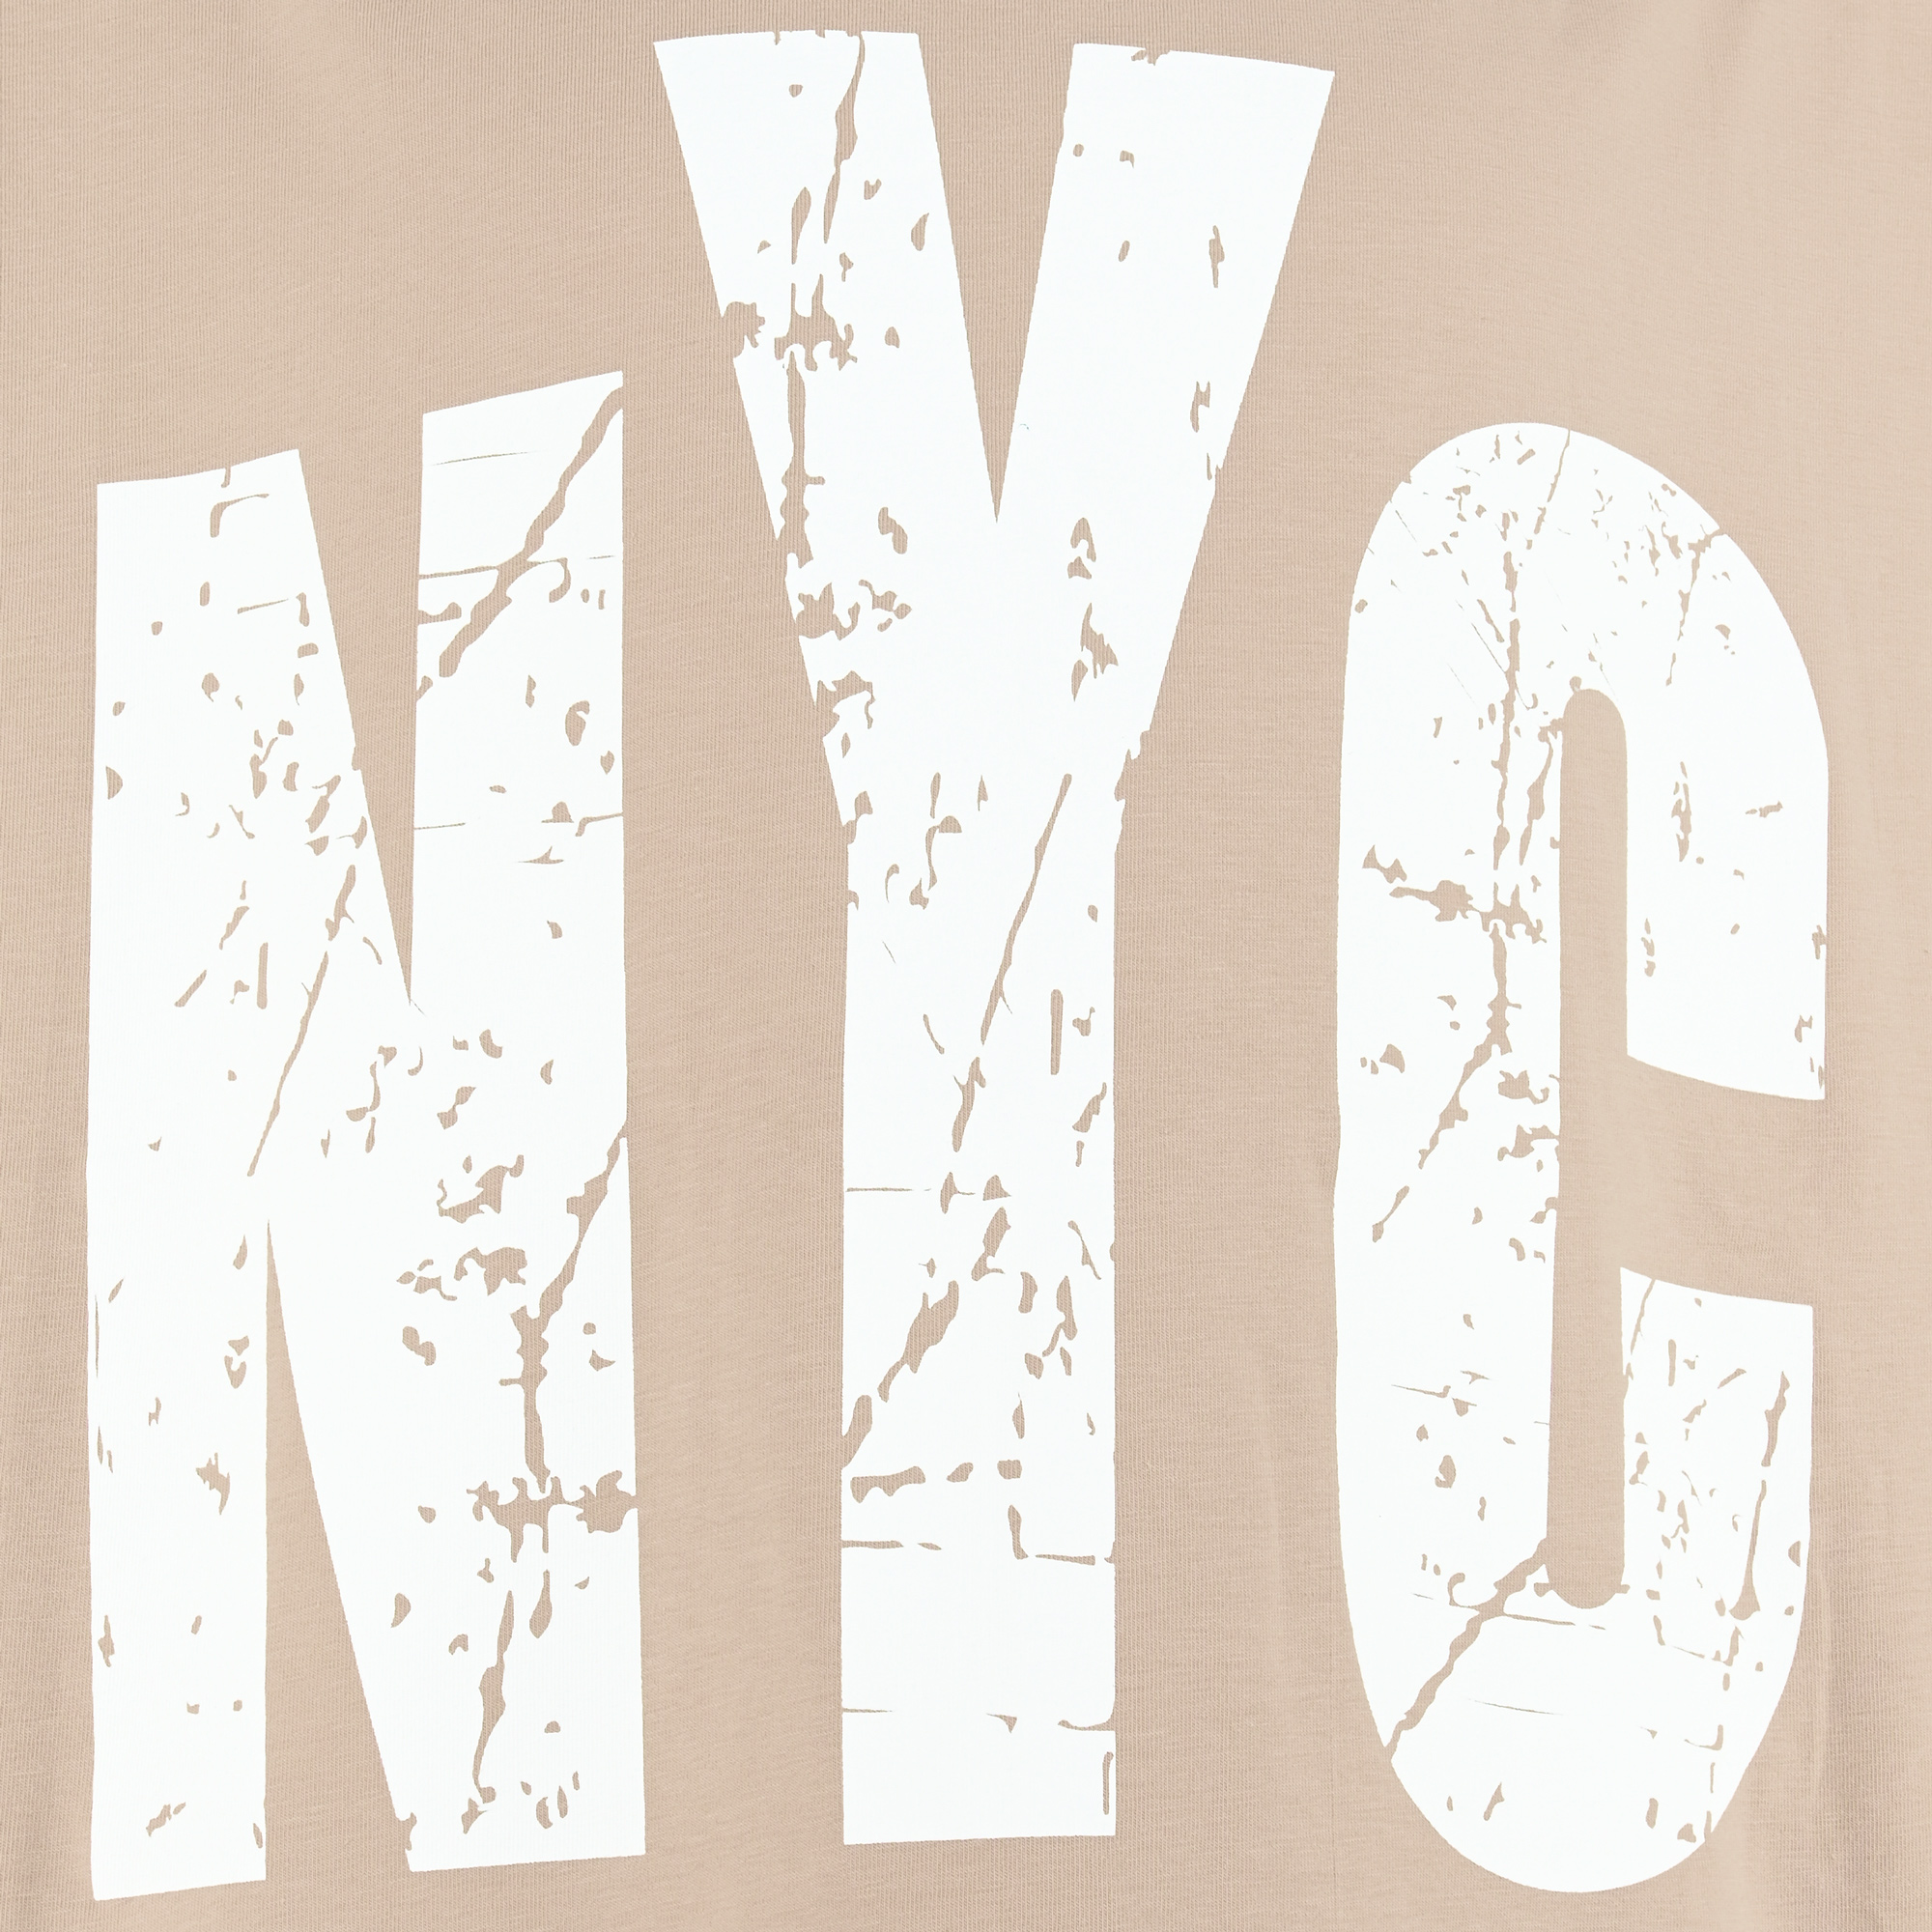 5726-Girls T-Shirt -NYC